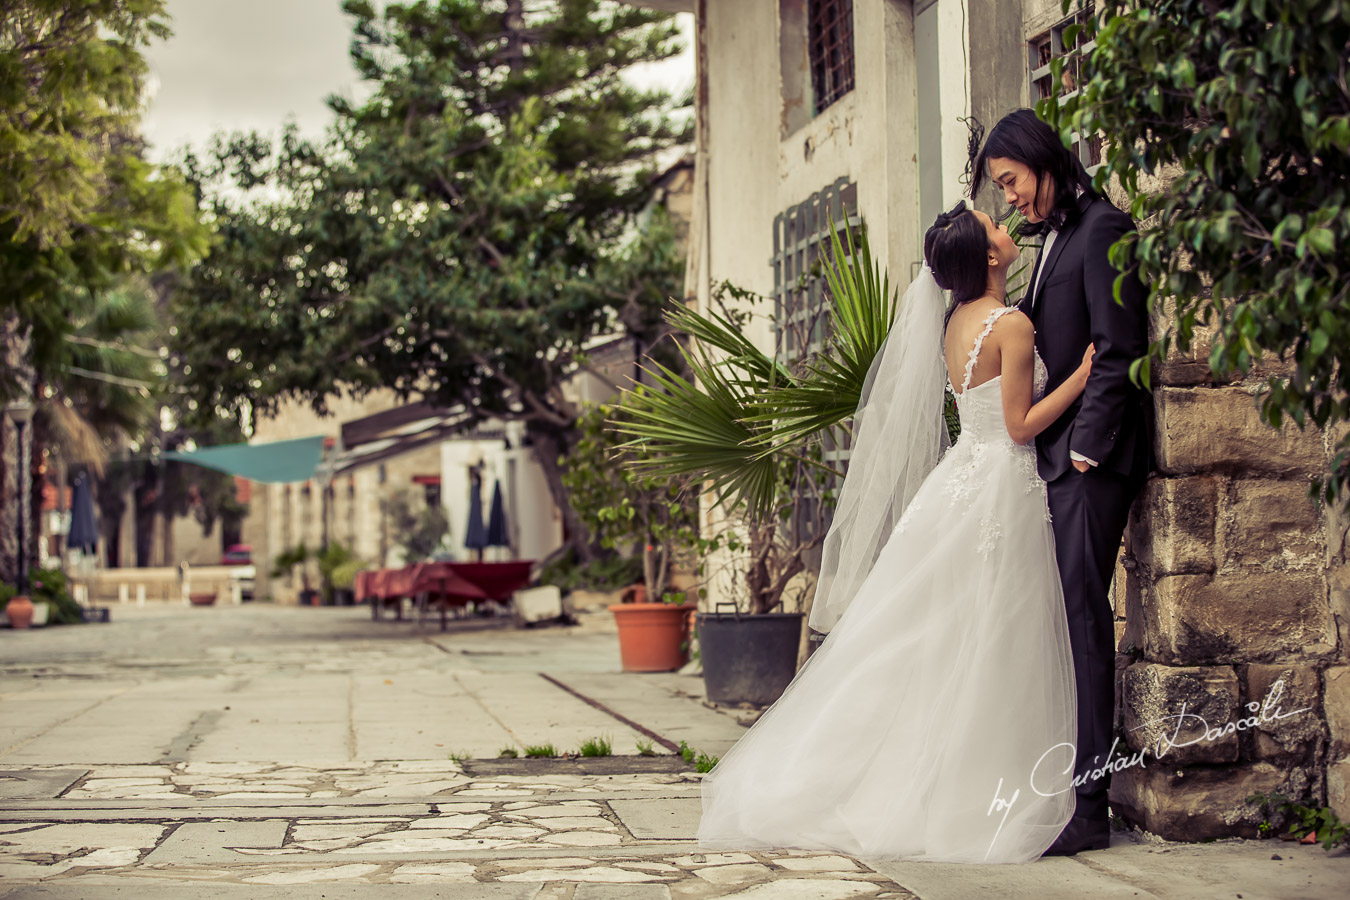 Pre Wedding Photoshoot in Cyprus - 06